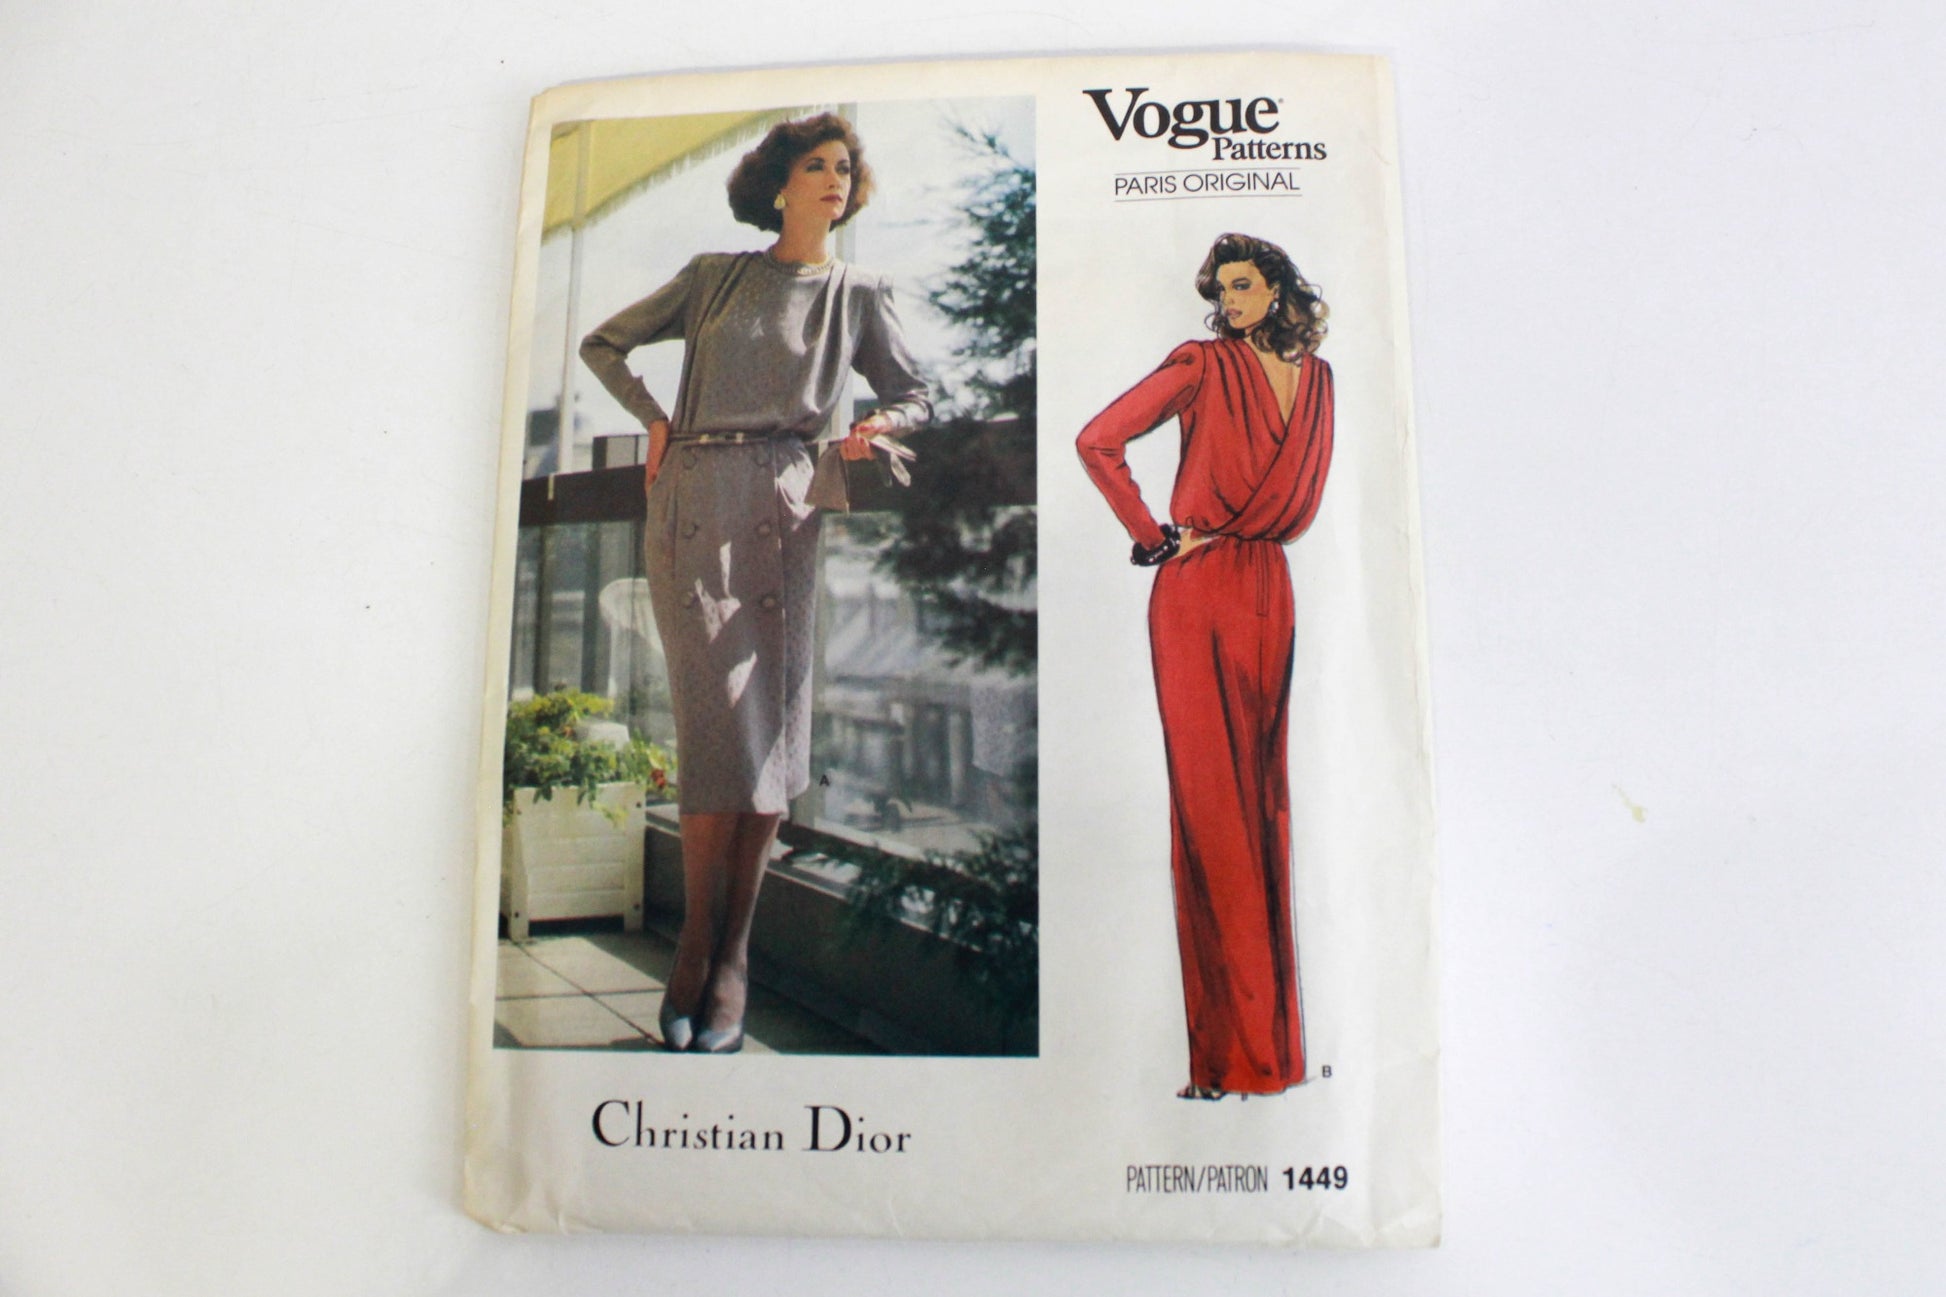 1980s vogue paris original sewing pattern 1449 christian dior dress